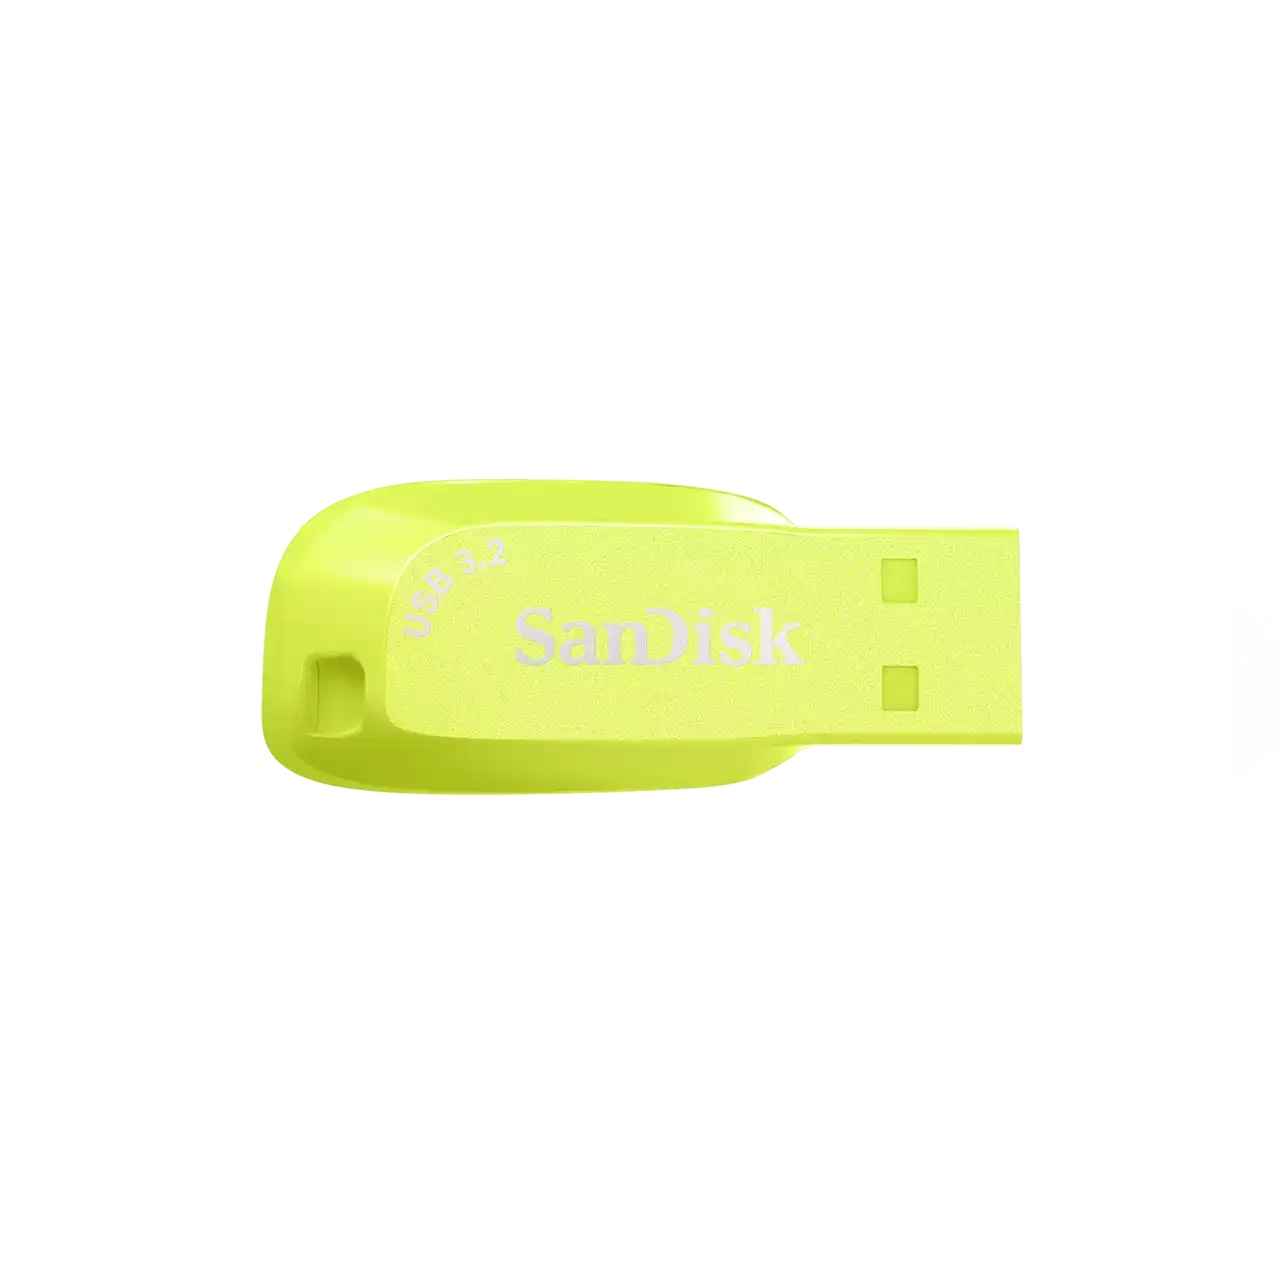 MEMORIA USB 64GB Z410 3.0 SANDISK AMARILLO (SDCZ410-064G-G46EP) ULTRA SHIF